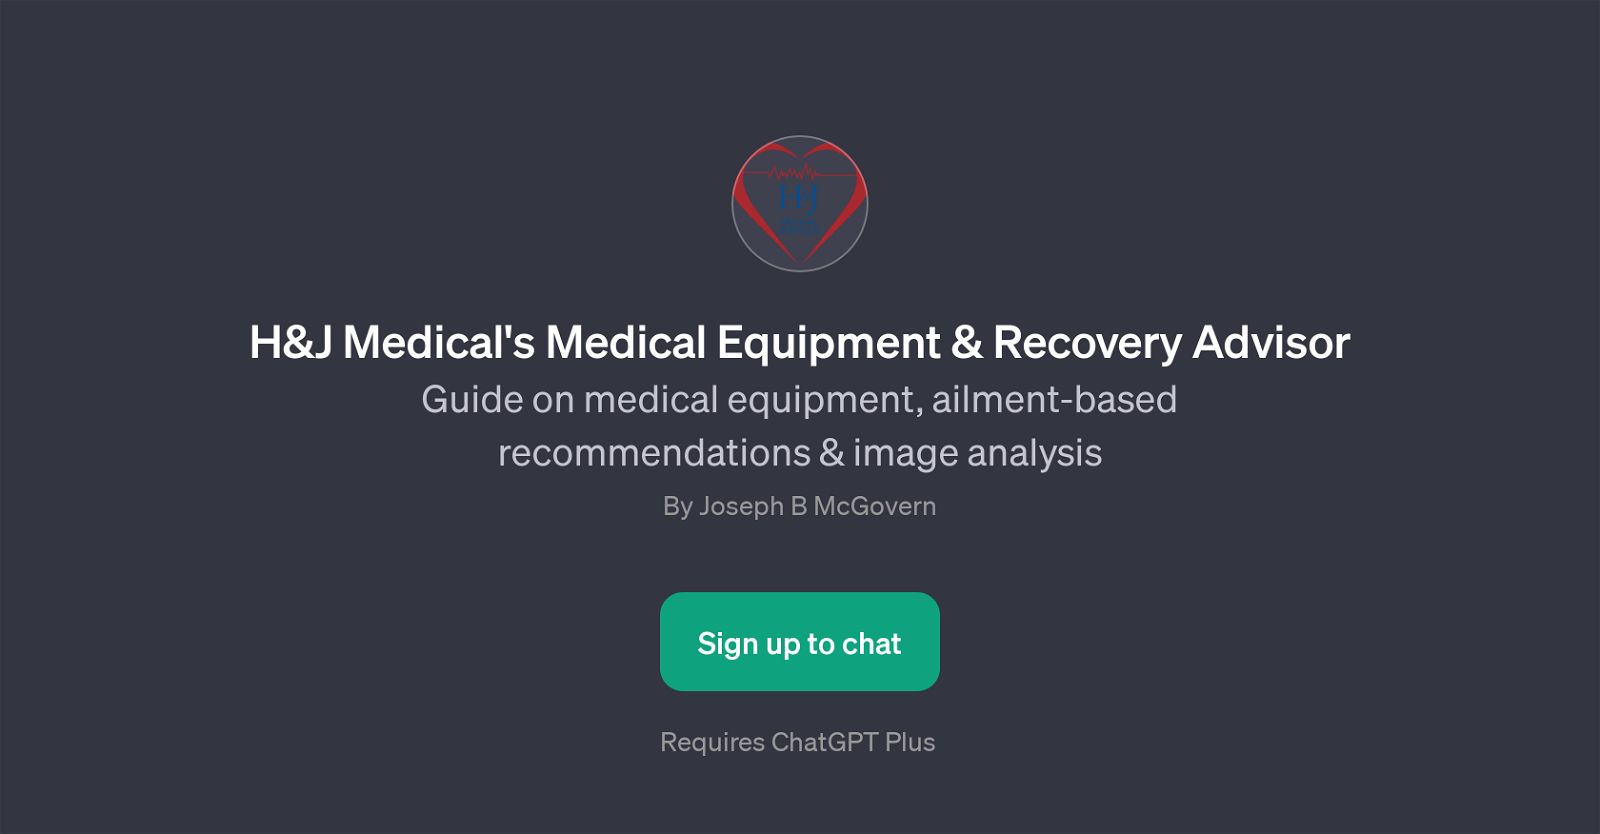 H&J Medical's Medical Equipment & Recovery Advisor website